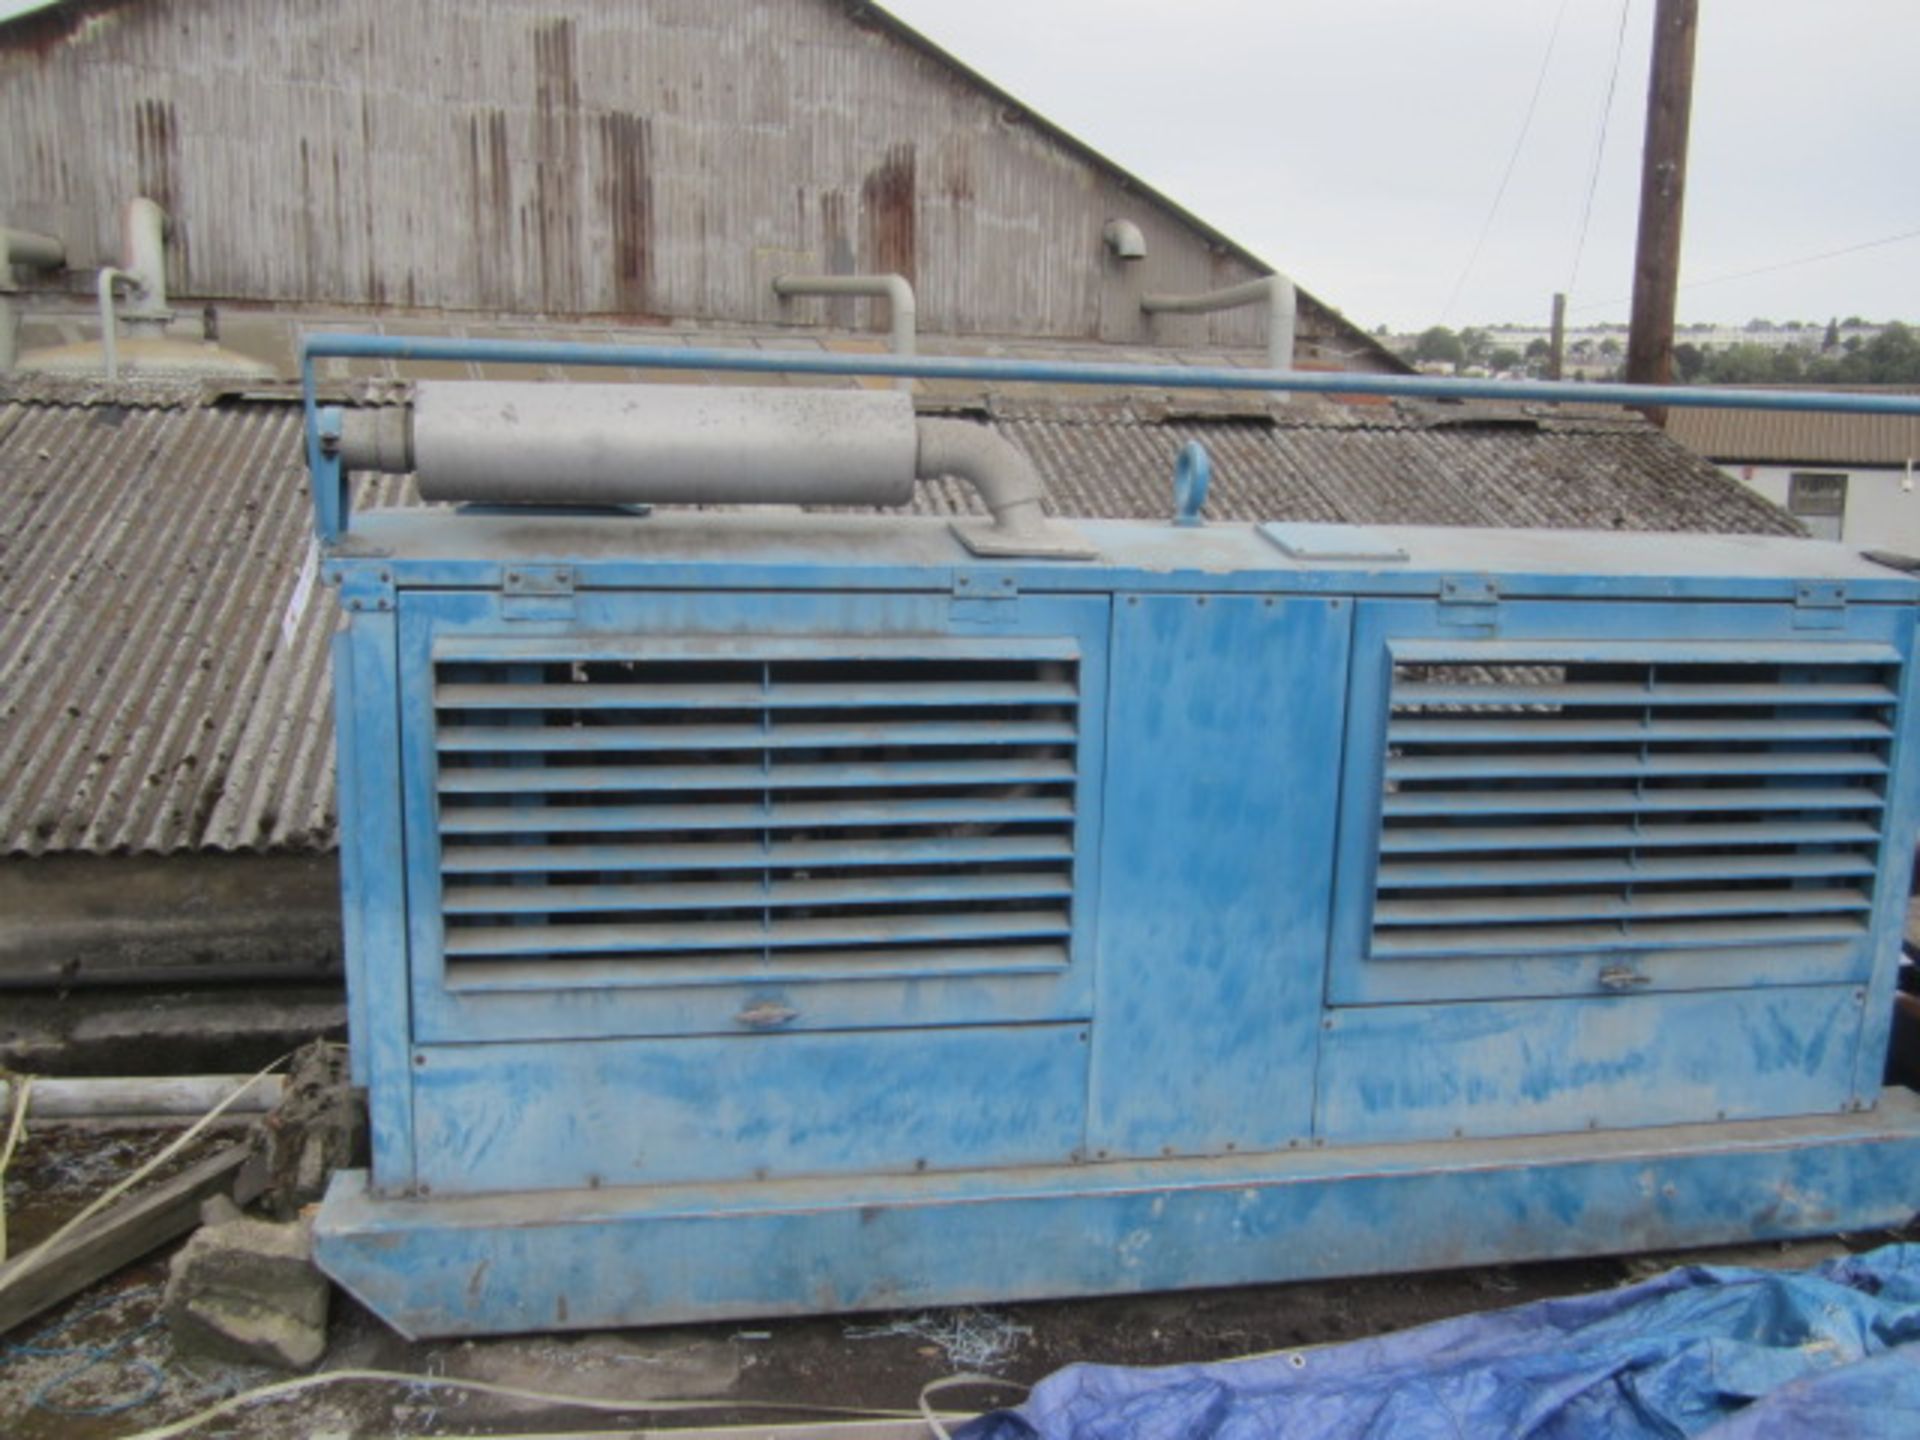 Countryman BTFHSC 100 stand by generator, skid mounted, Generator No. 2521 110, Engine No. 122460, - Image 2 of 7